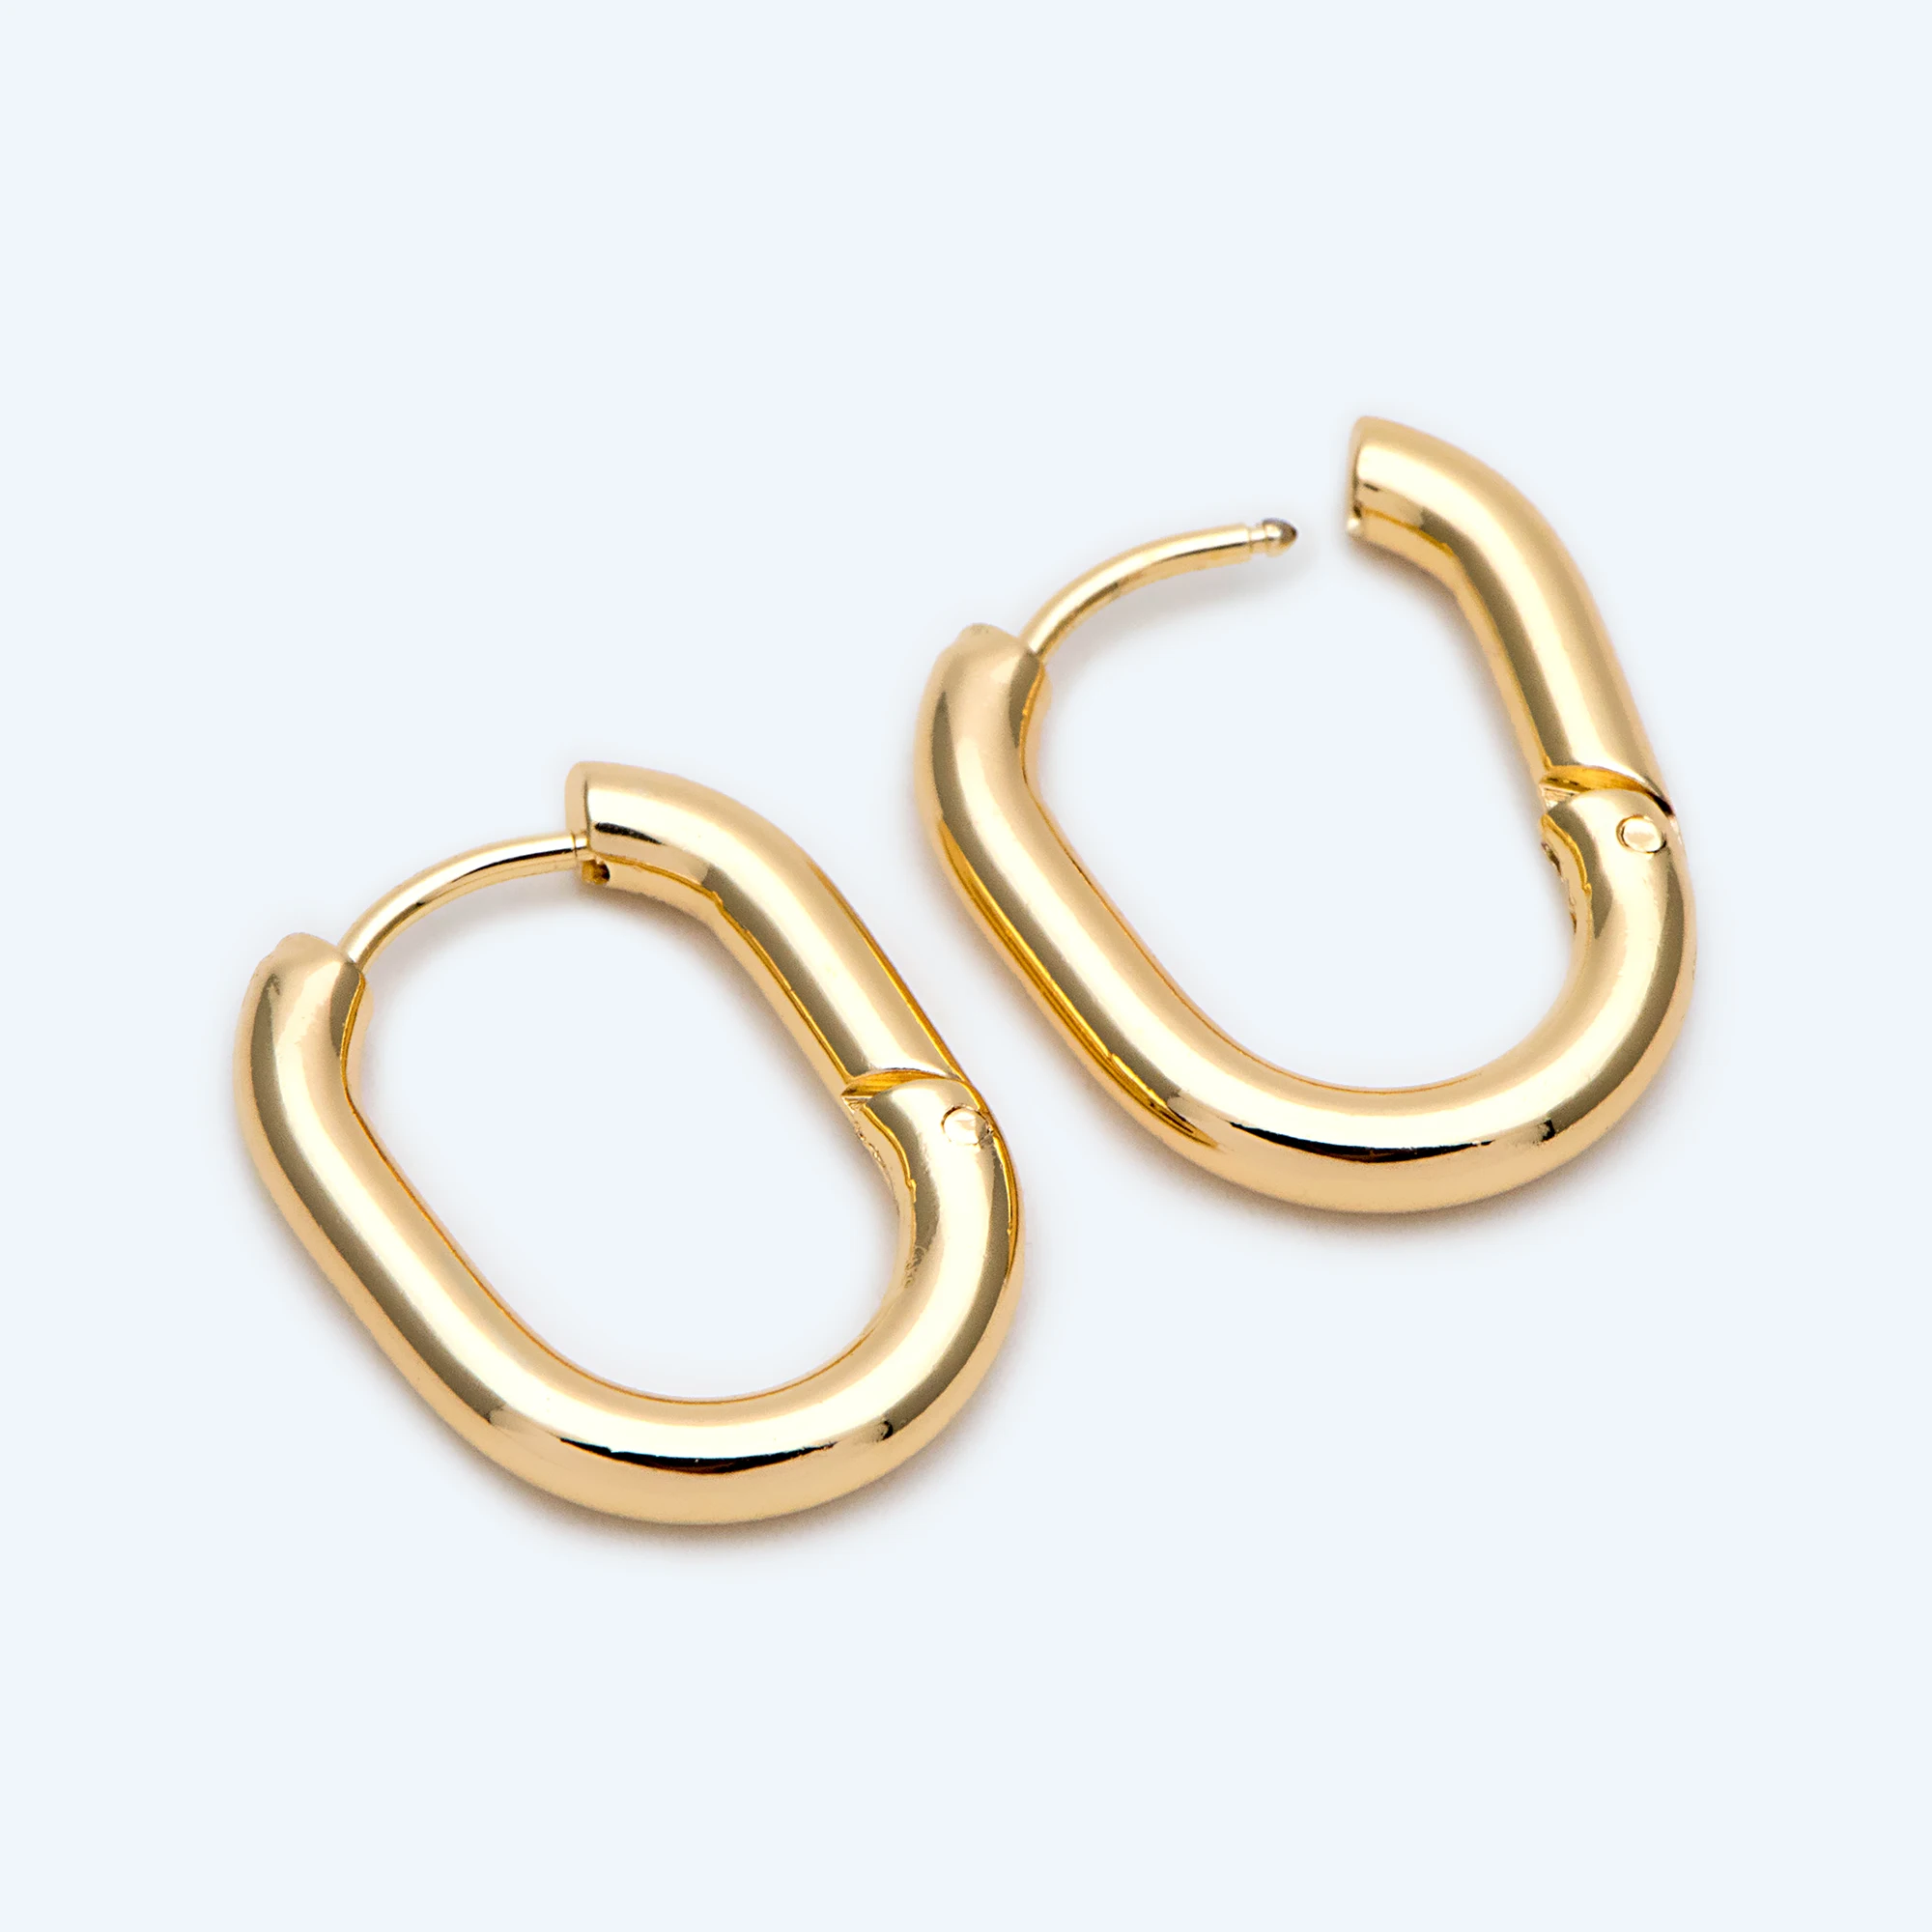 4pcs Dangle Minimalist Huggies Earring 20x16mm, Gold Plated Stainless Steel, For Women Geometrical Fashion Jewelry (GB-2388)